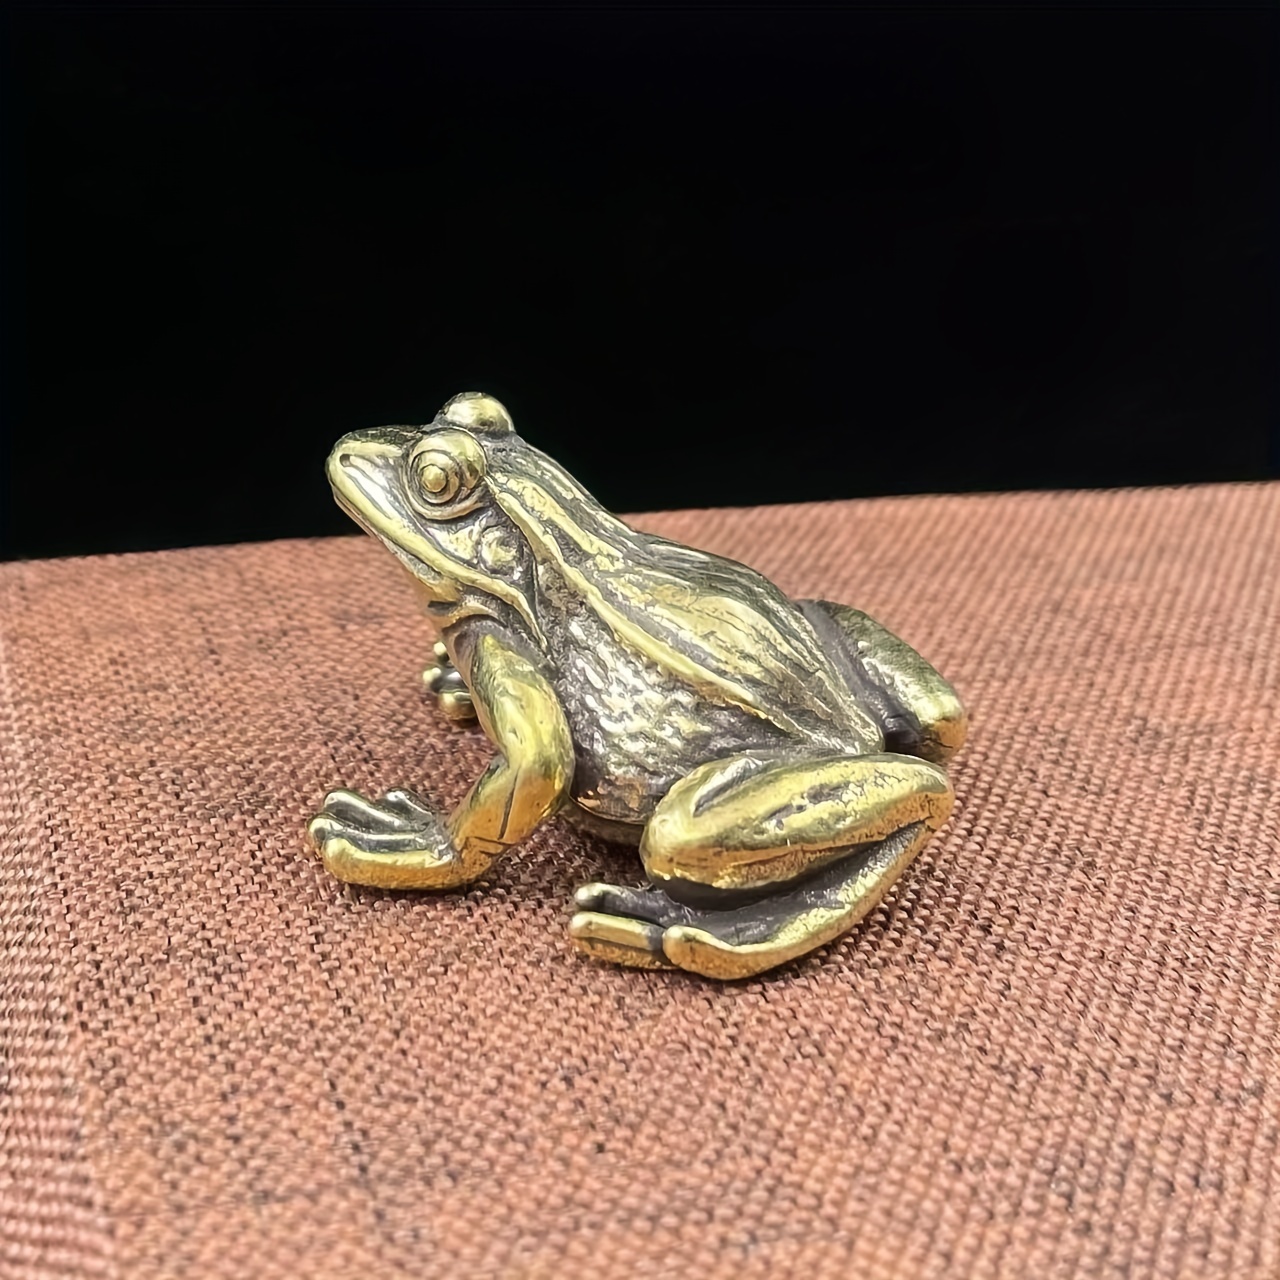  Brass Frog Figurine,Animals Brass Decor Ornaments Home